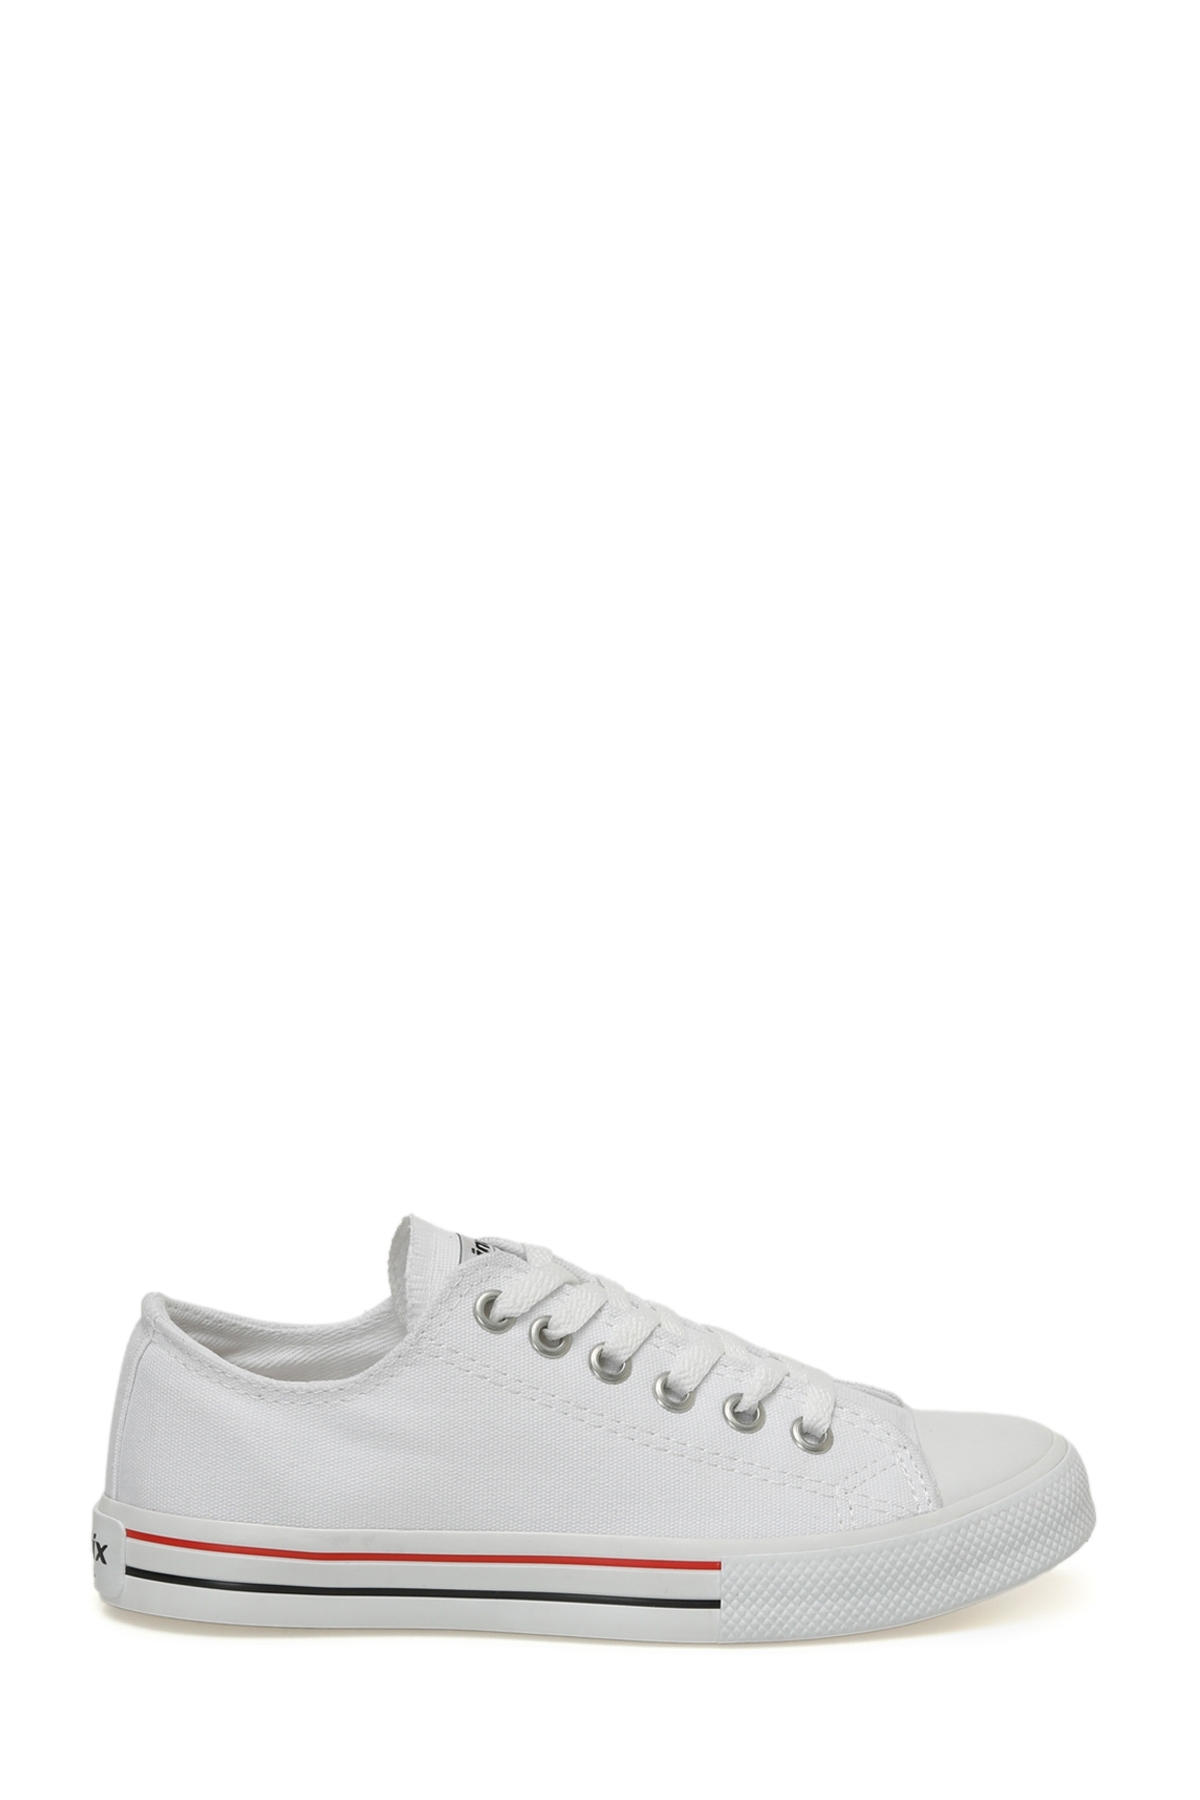 Levně KINETIX SABLE W 4FX White Women's Sneaker